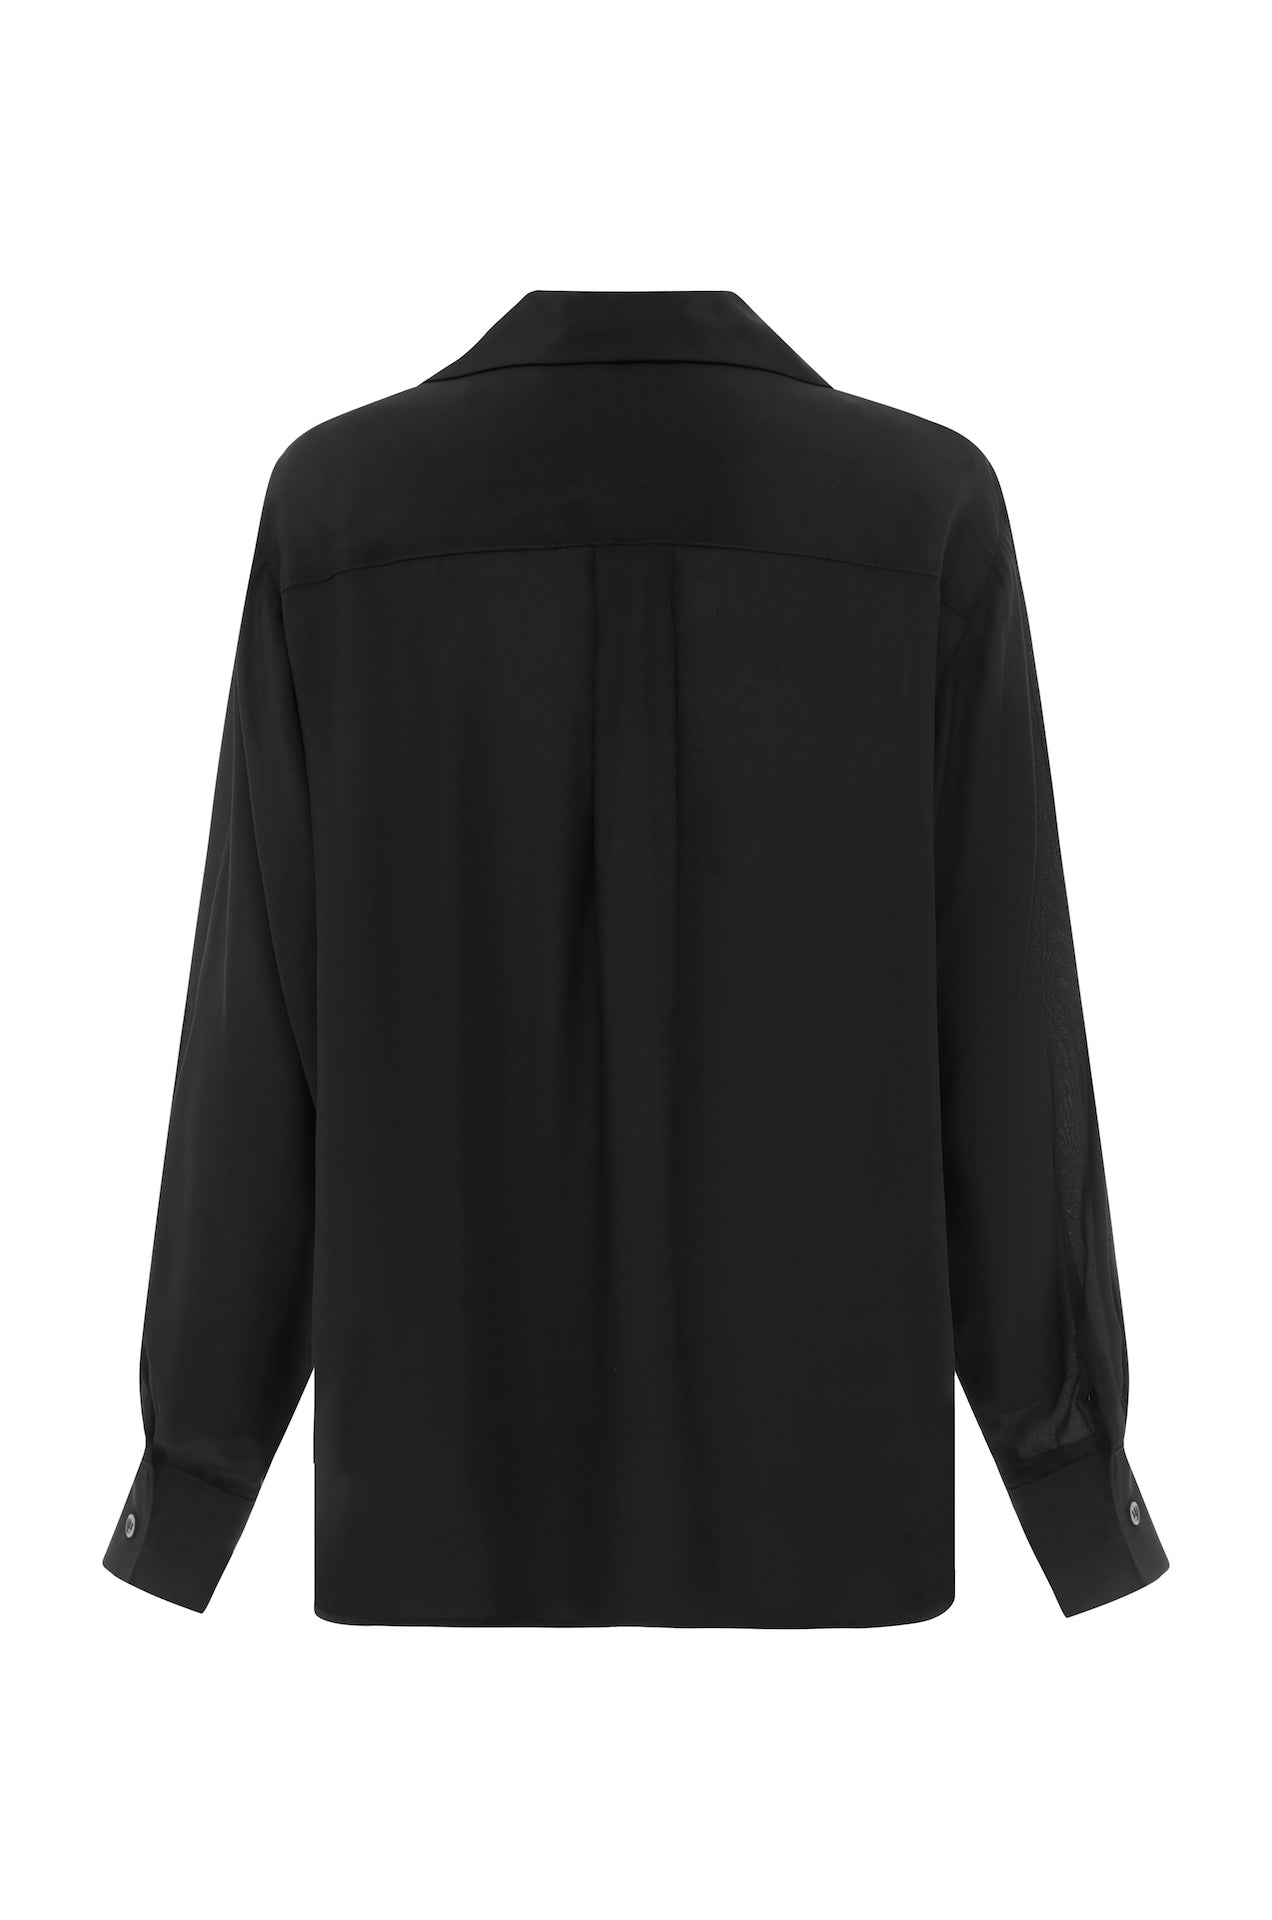 SAINT classic silk shirt in black pure silk. made in Australia. 100% silk crepe de chine